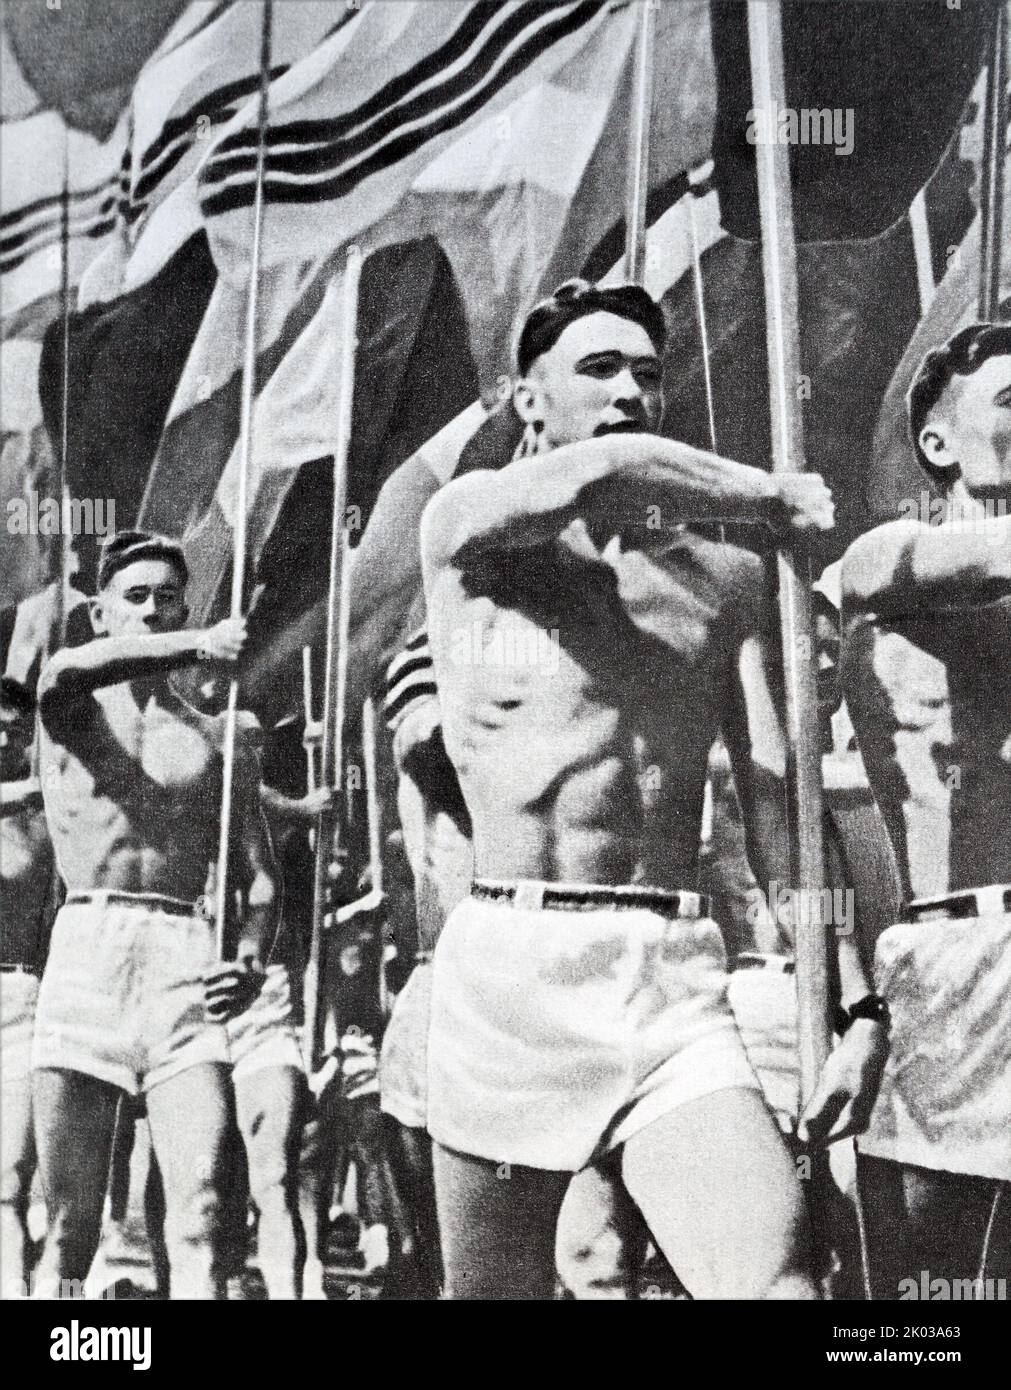 Propaganda photograph of soviet athletes at a sports event. 1962 Stock Photo